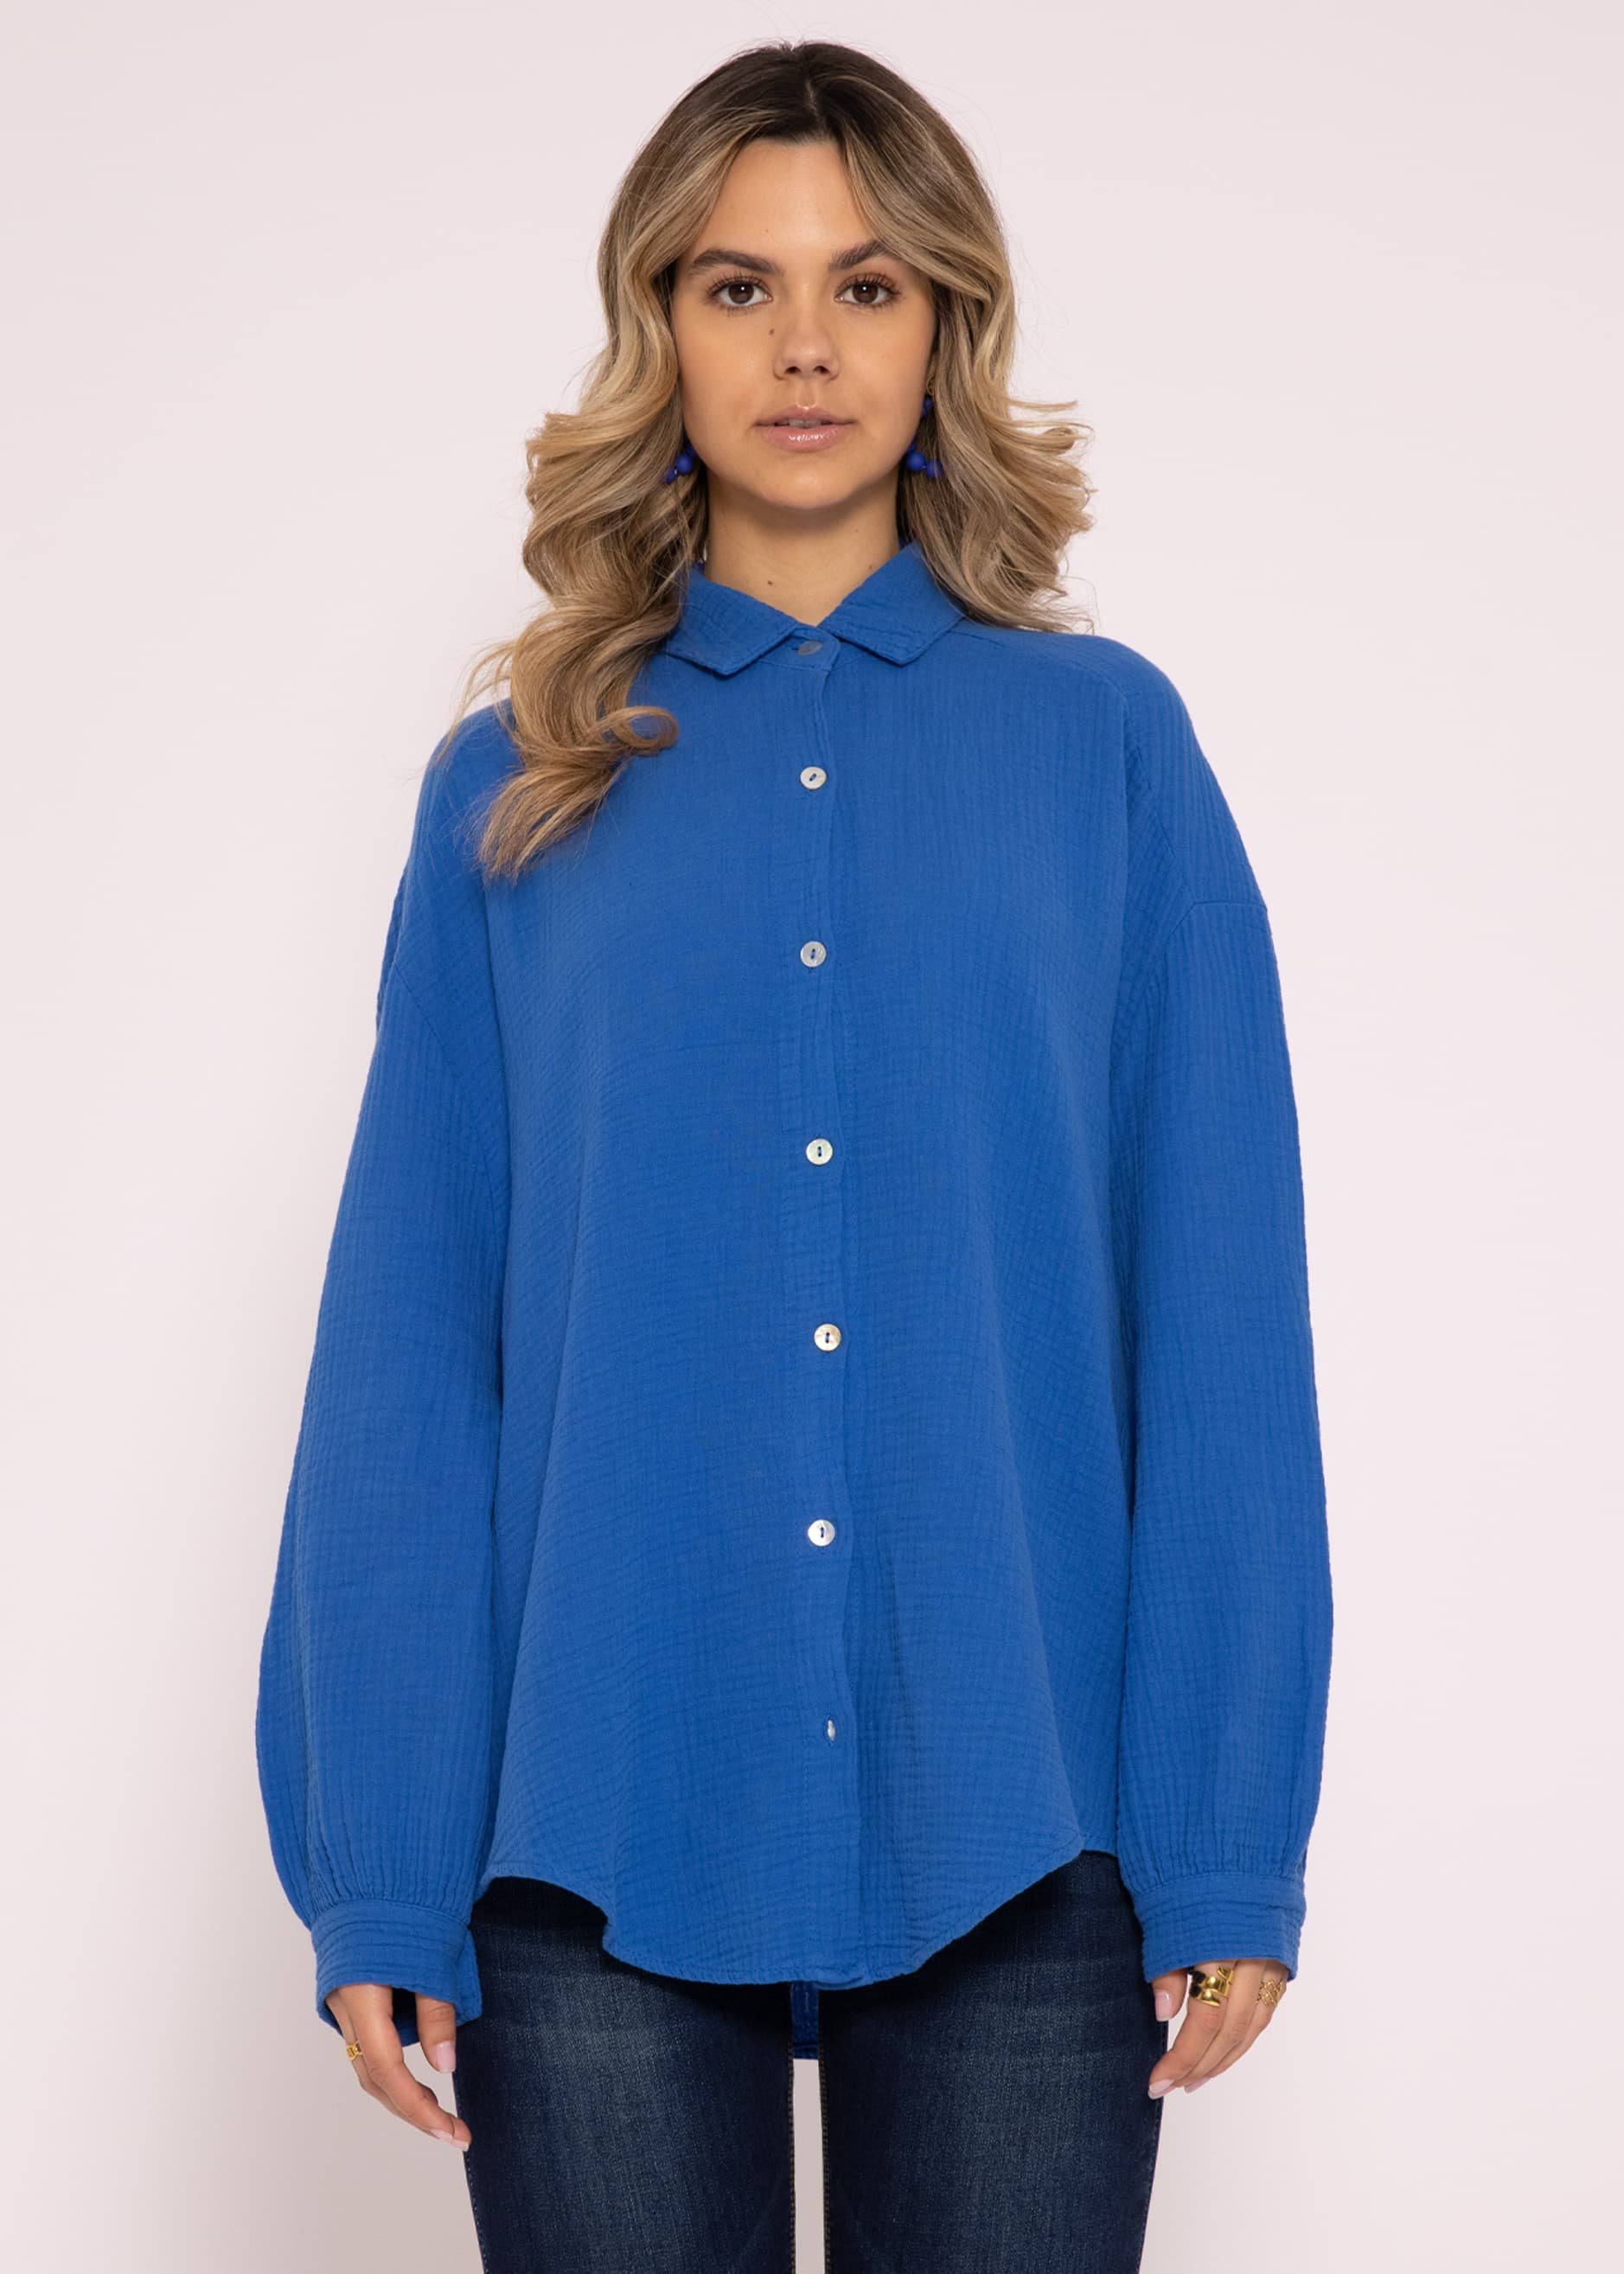 SASSYCLASSY Longbluse Oversize Musselin Bluse Damen Langarm Hemdbluse lang aus Baumwolle mit V-Ausschnitt, One Size (Gr. 36-48) Royalblau